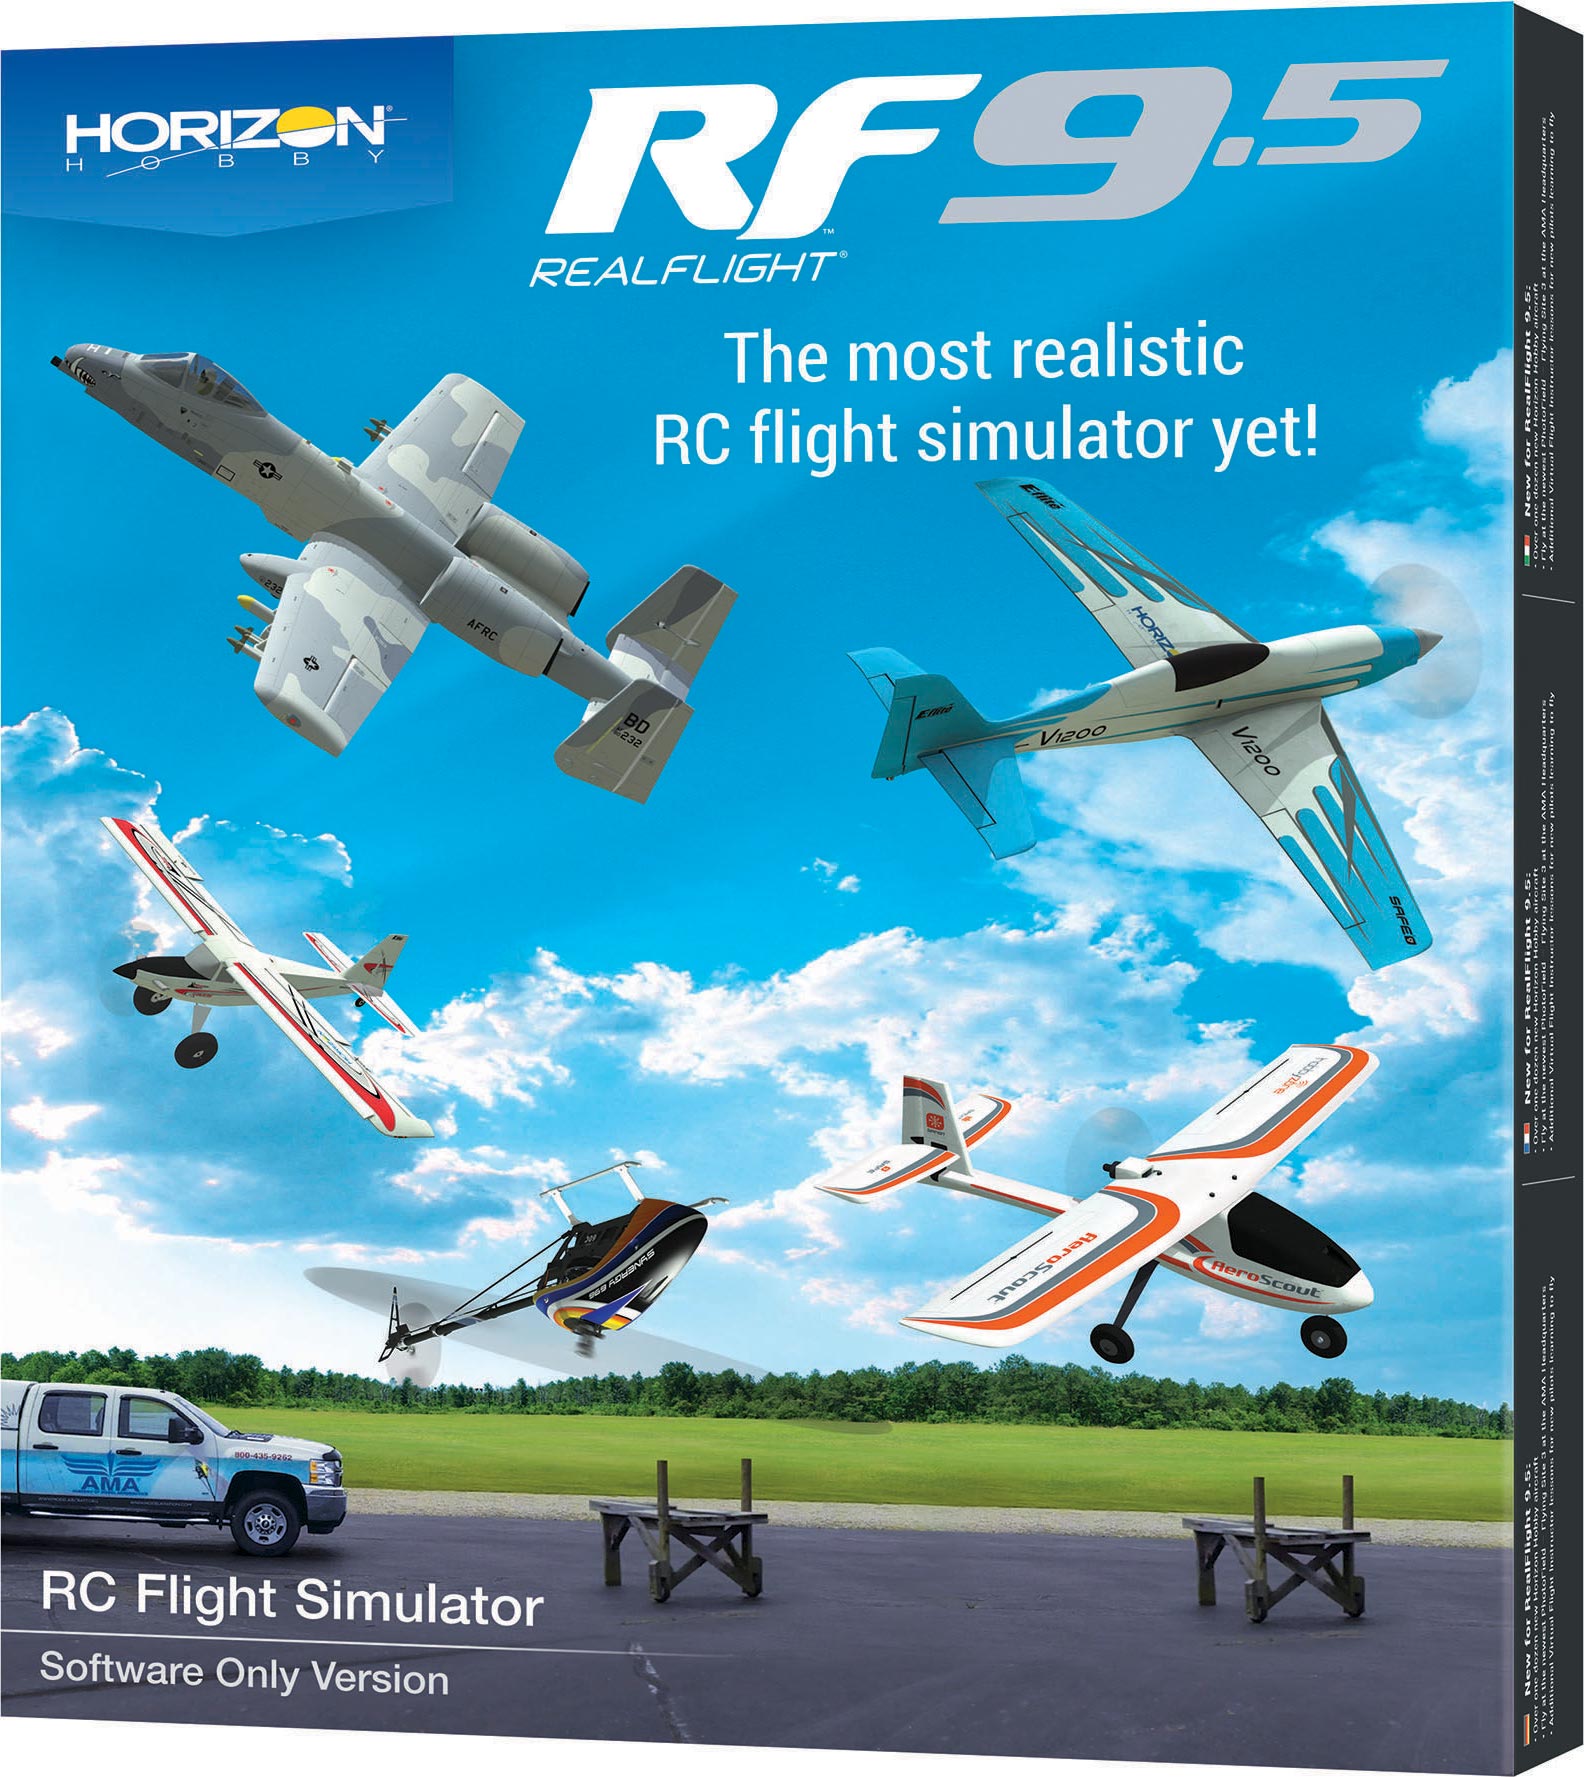 RealFlight 9.5 R/C Flight Simulator Software Only